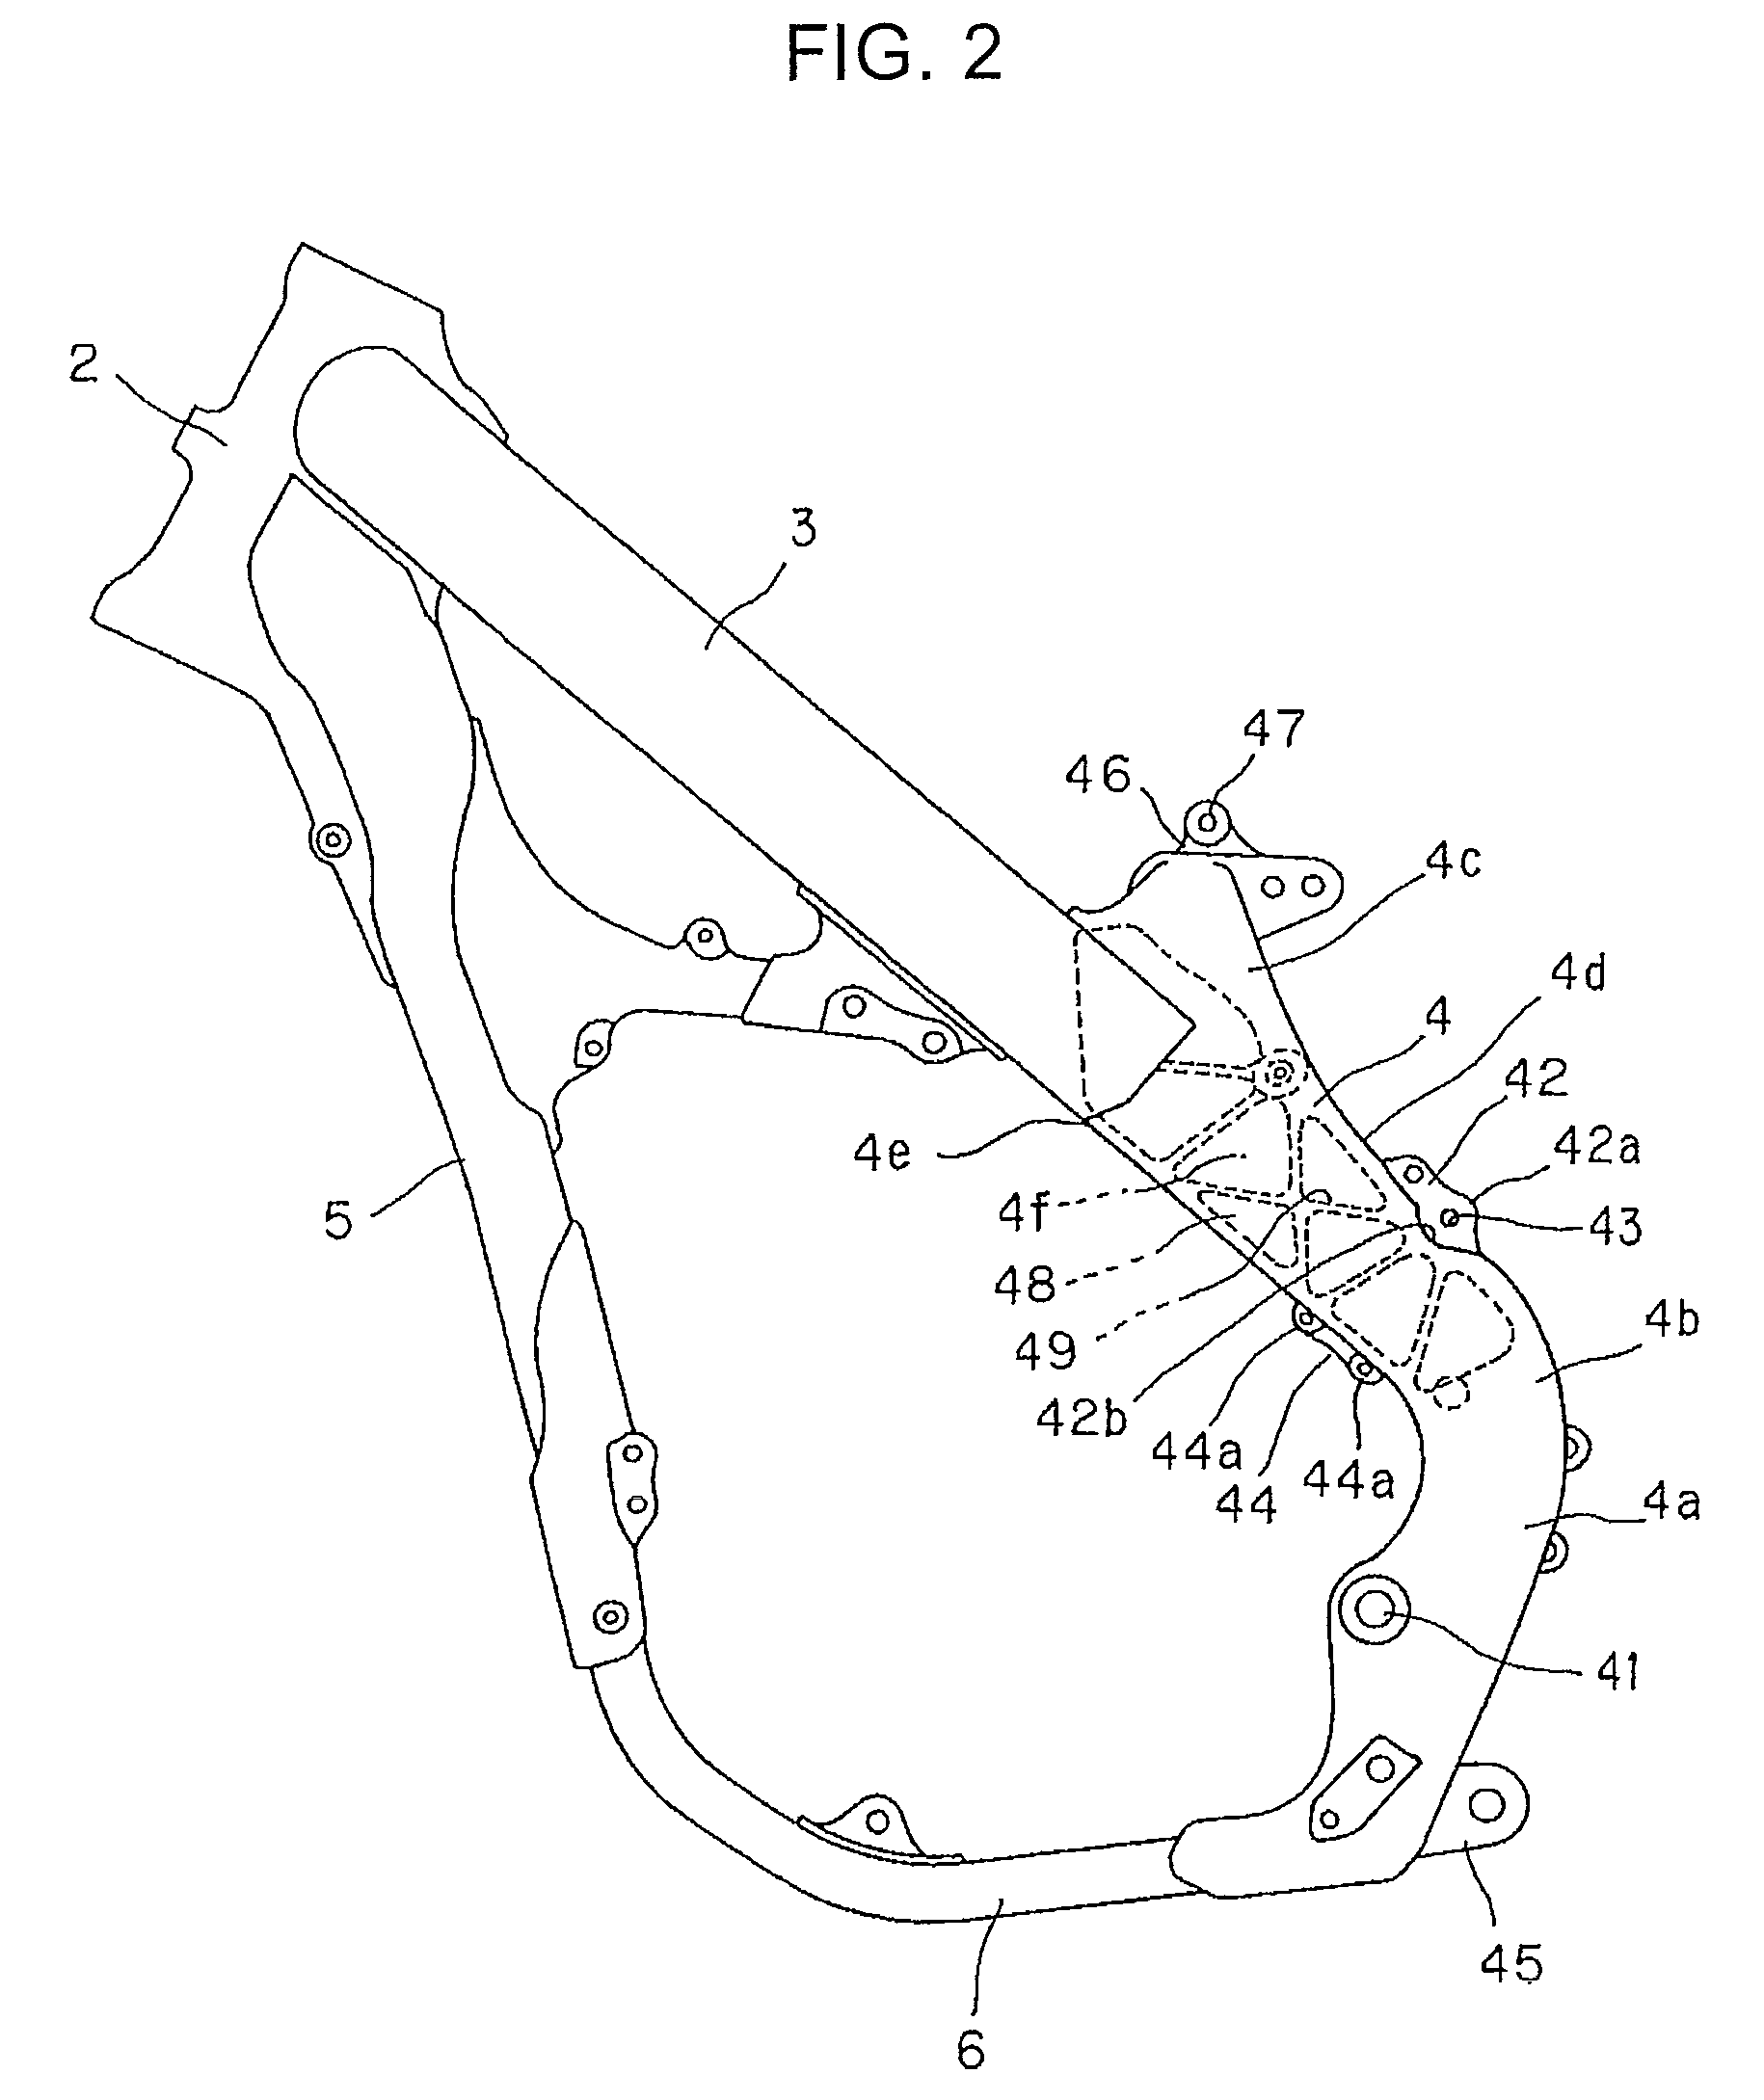 Arrangement structure of radiator reservoir tank of motorcycle